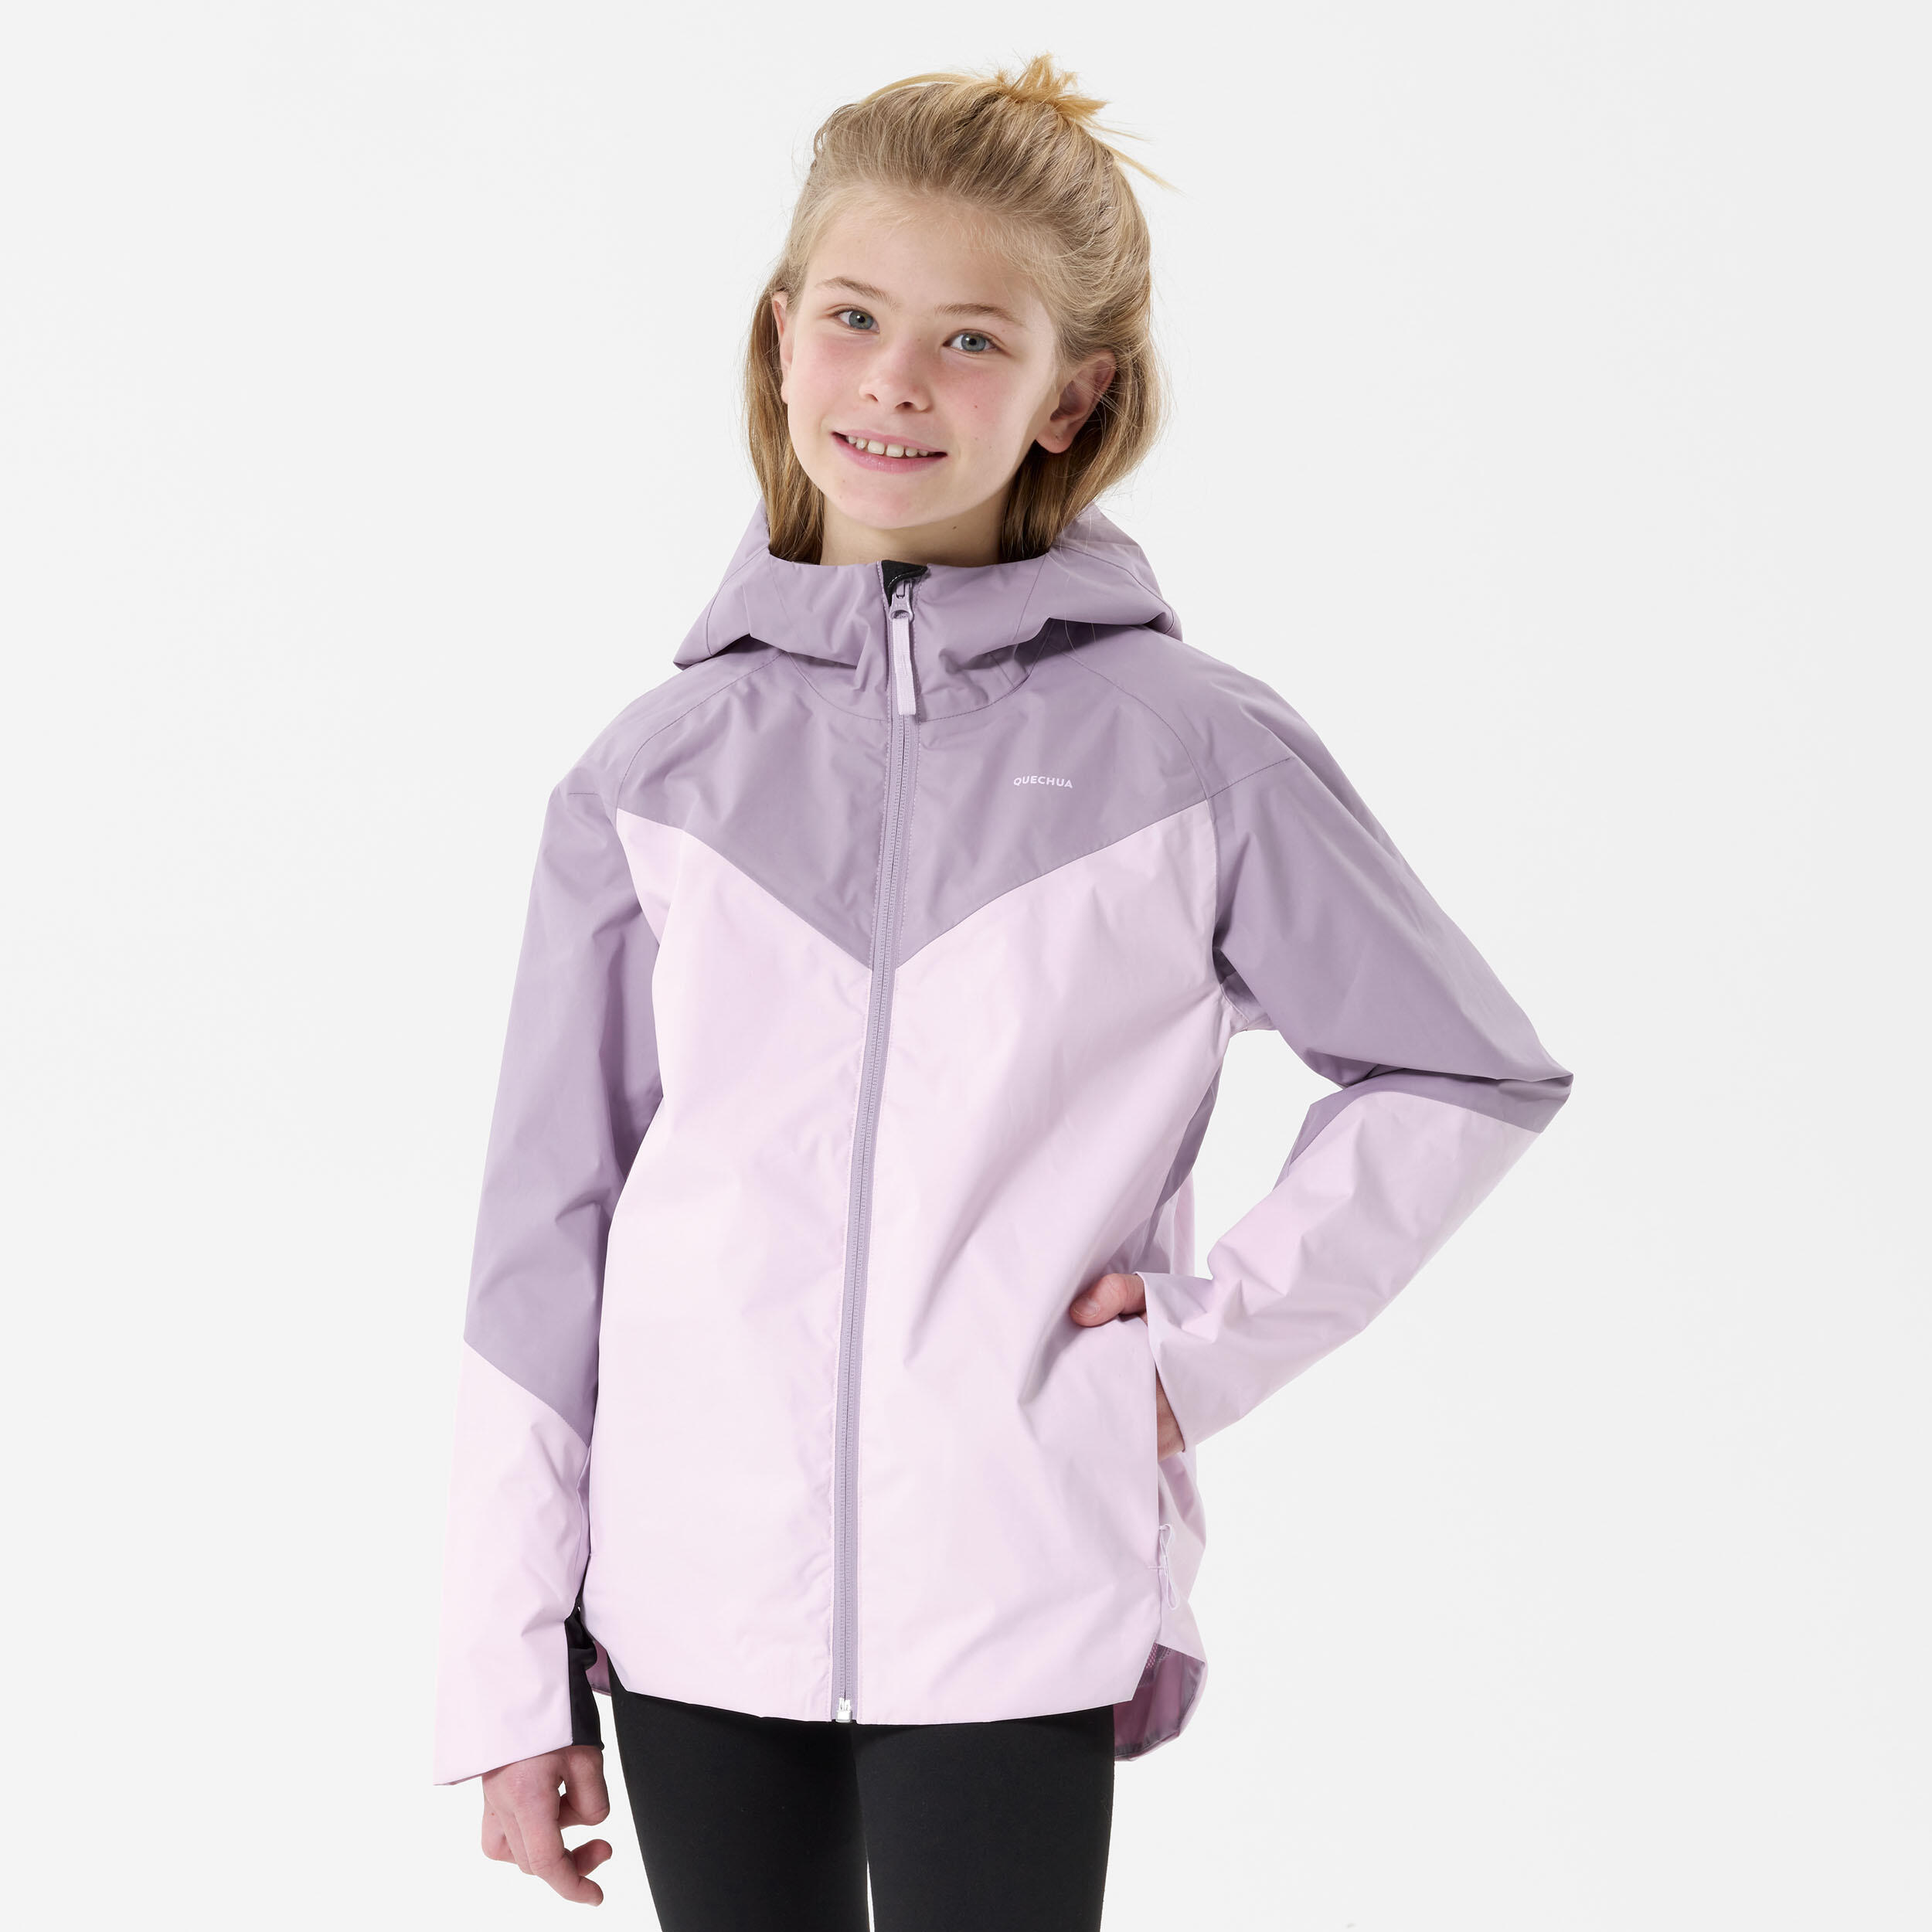 Child's waterproof hiking jacket - MH500 purple and mauve - 7-15 years 4/8